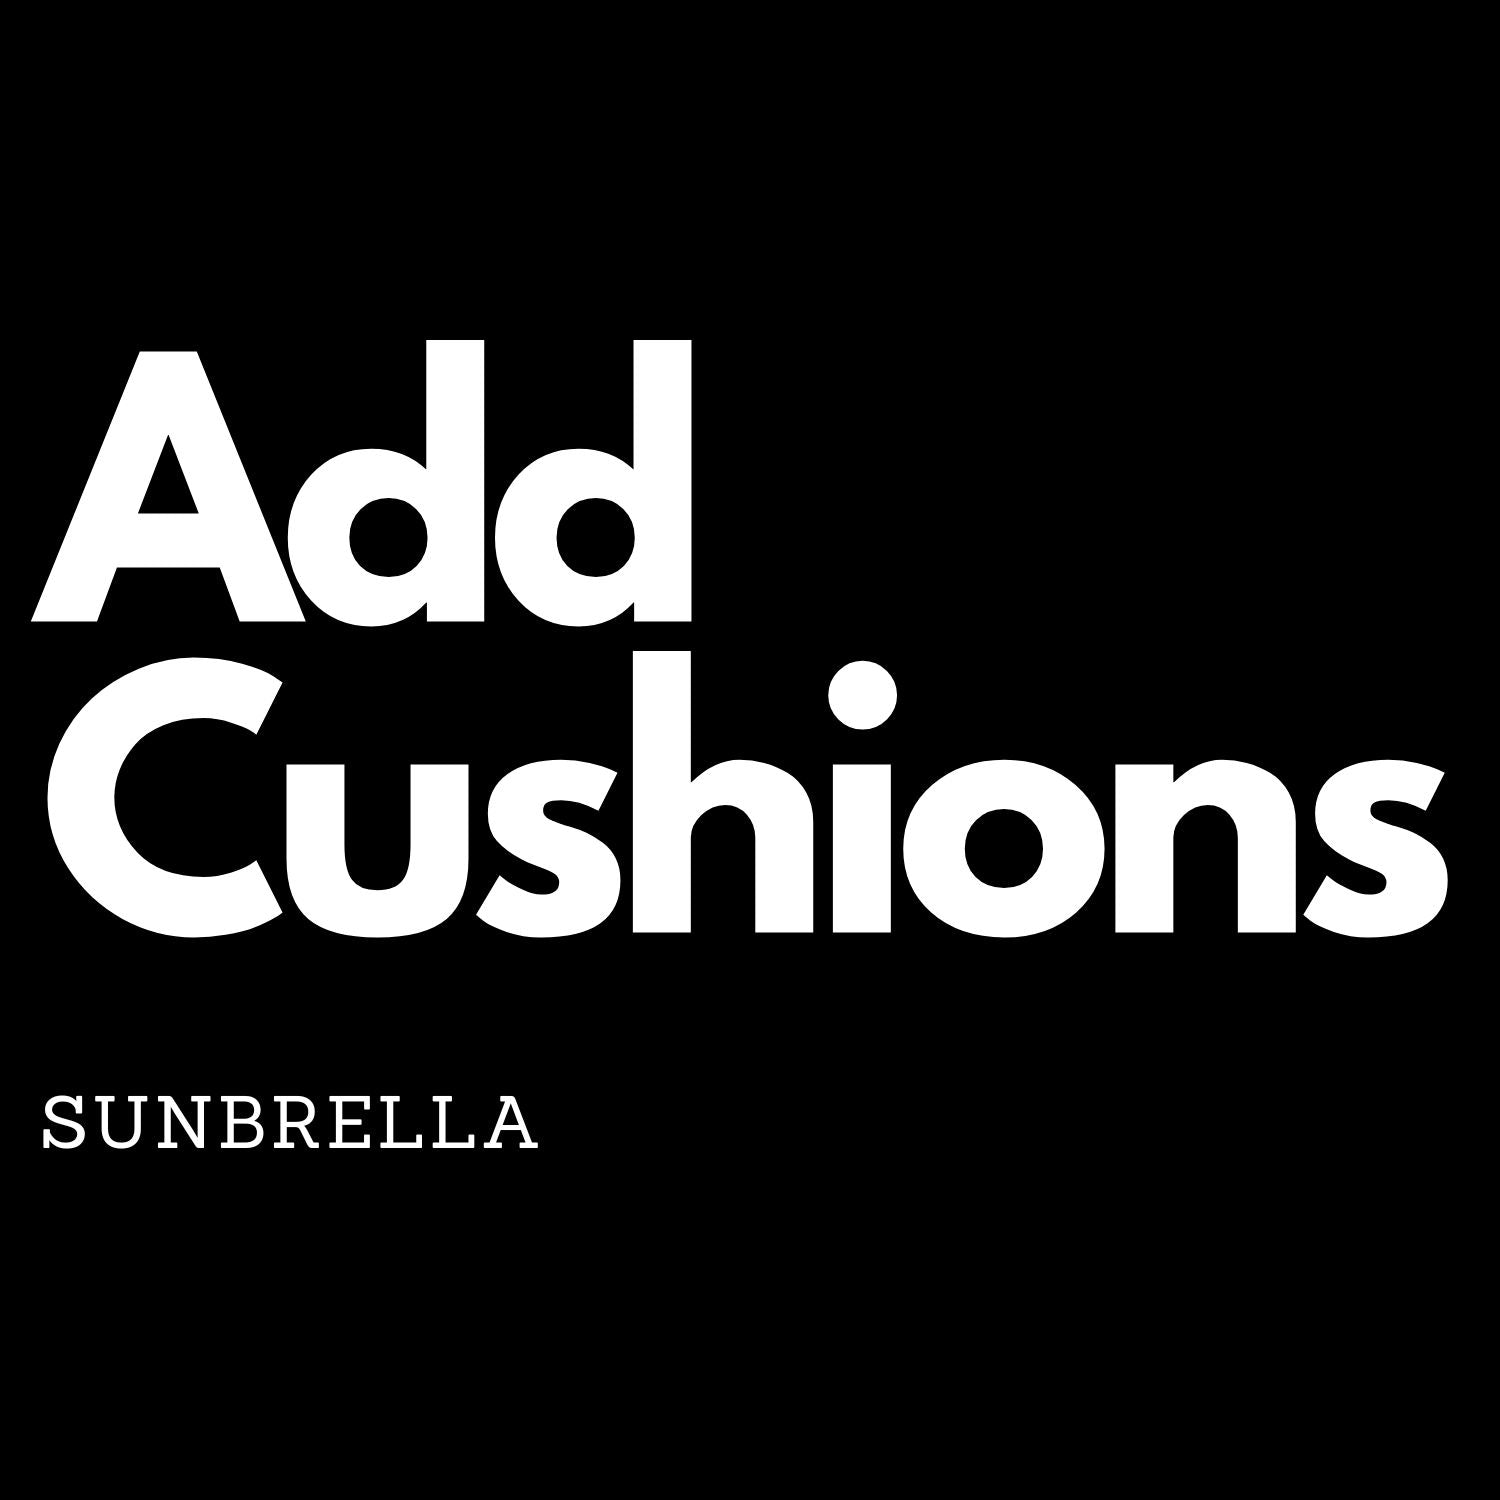 Anderson Teak - Cushion for CHR-087